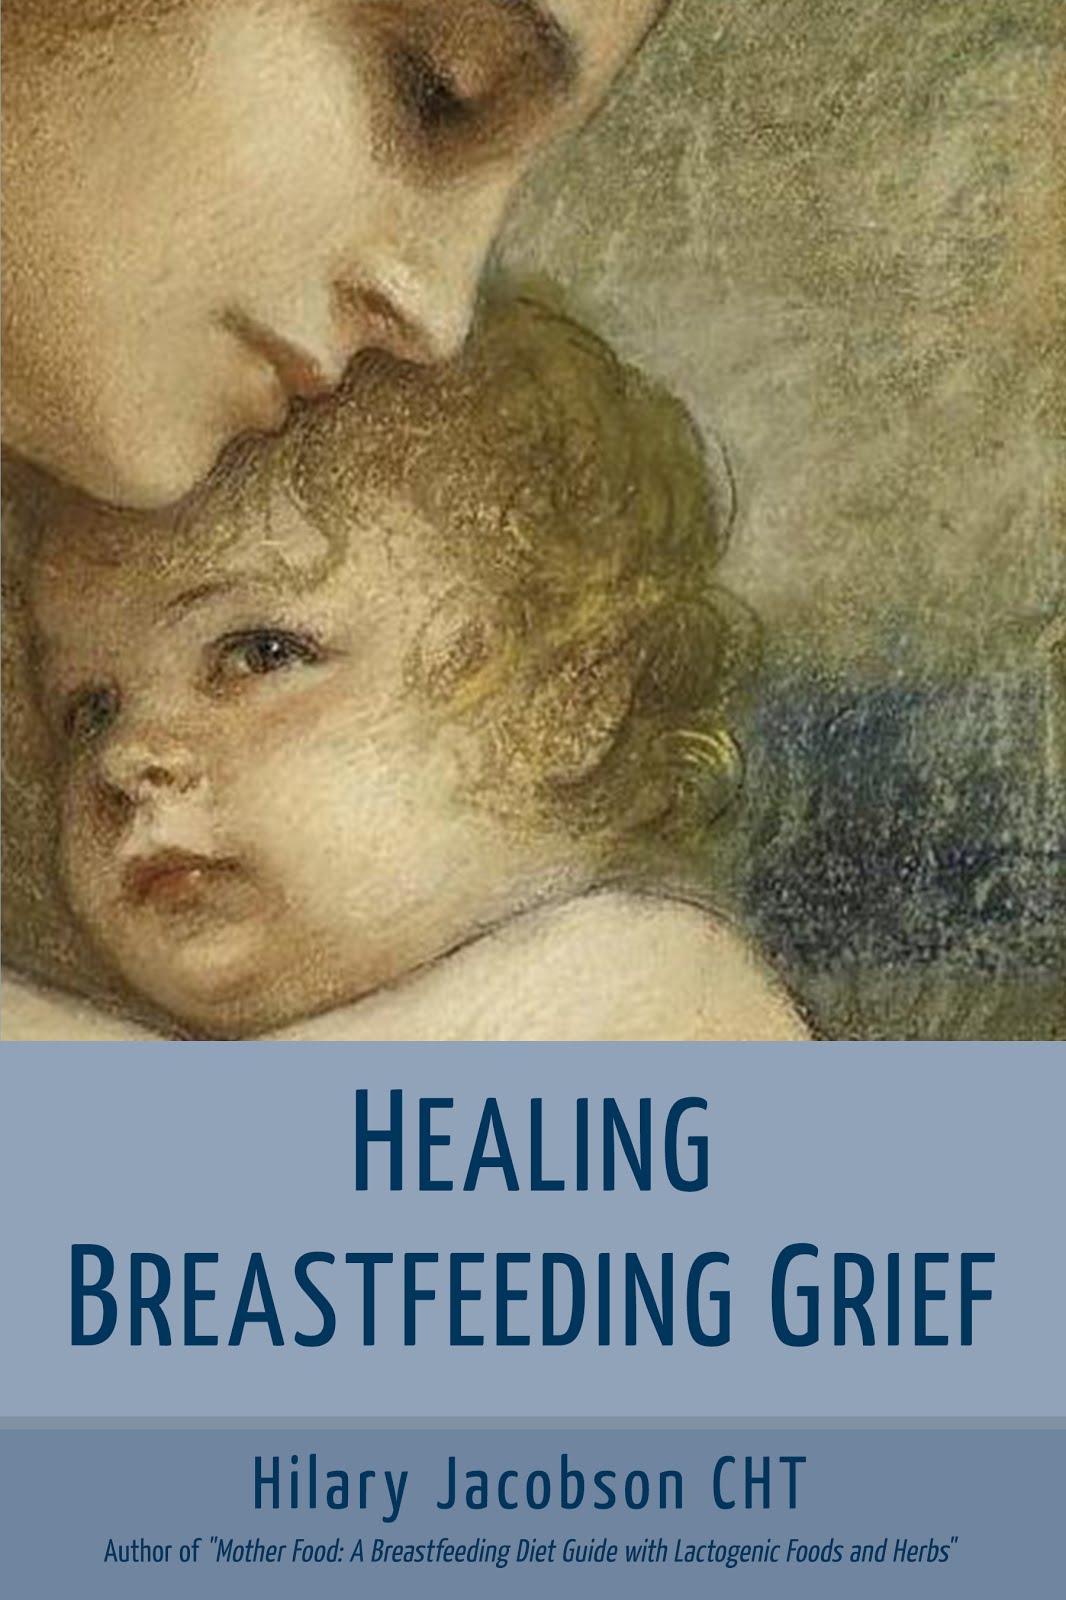 Purchase Healing Breastfeeding Grief.